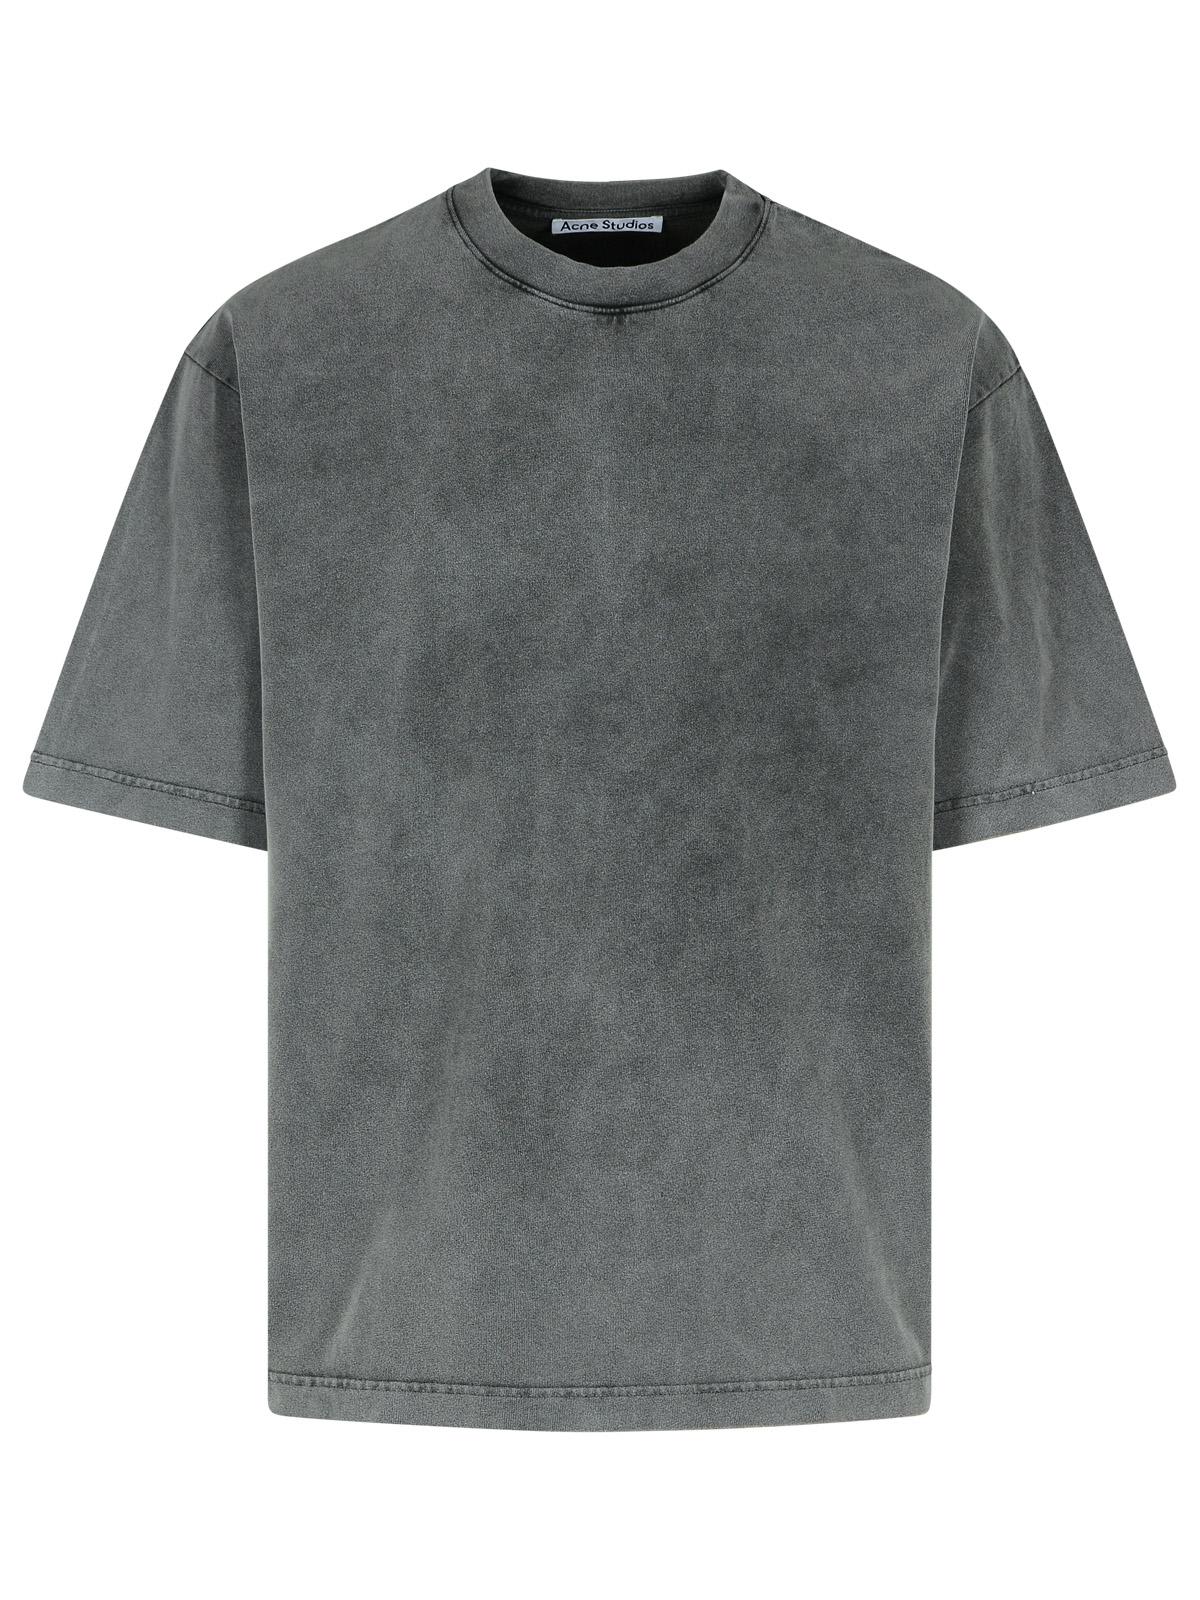 Gray Cotton T-shirt